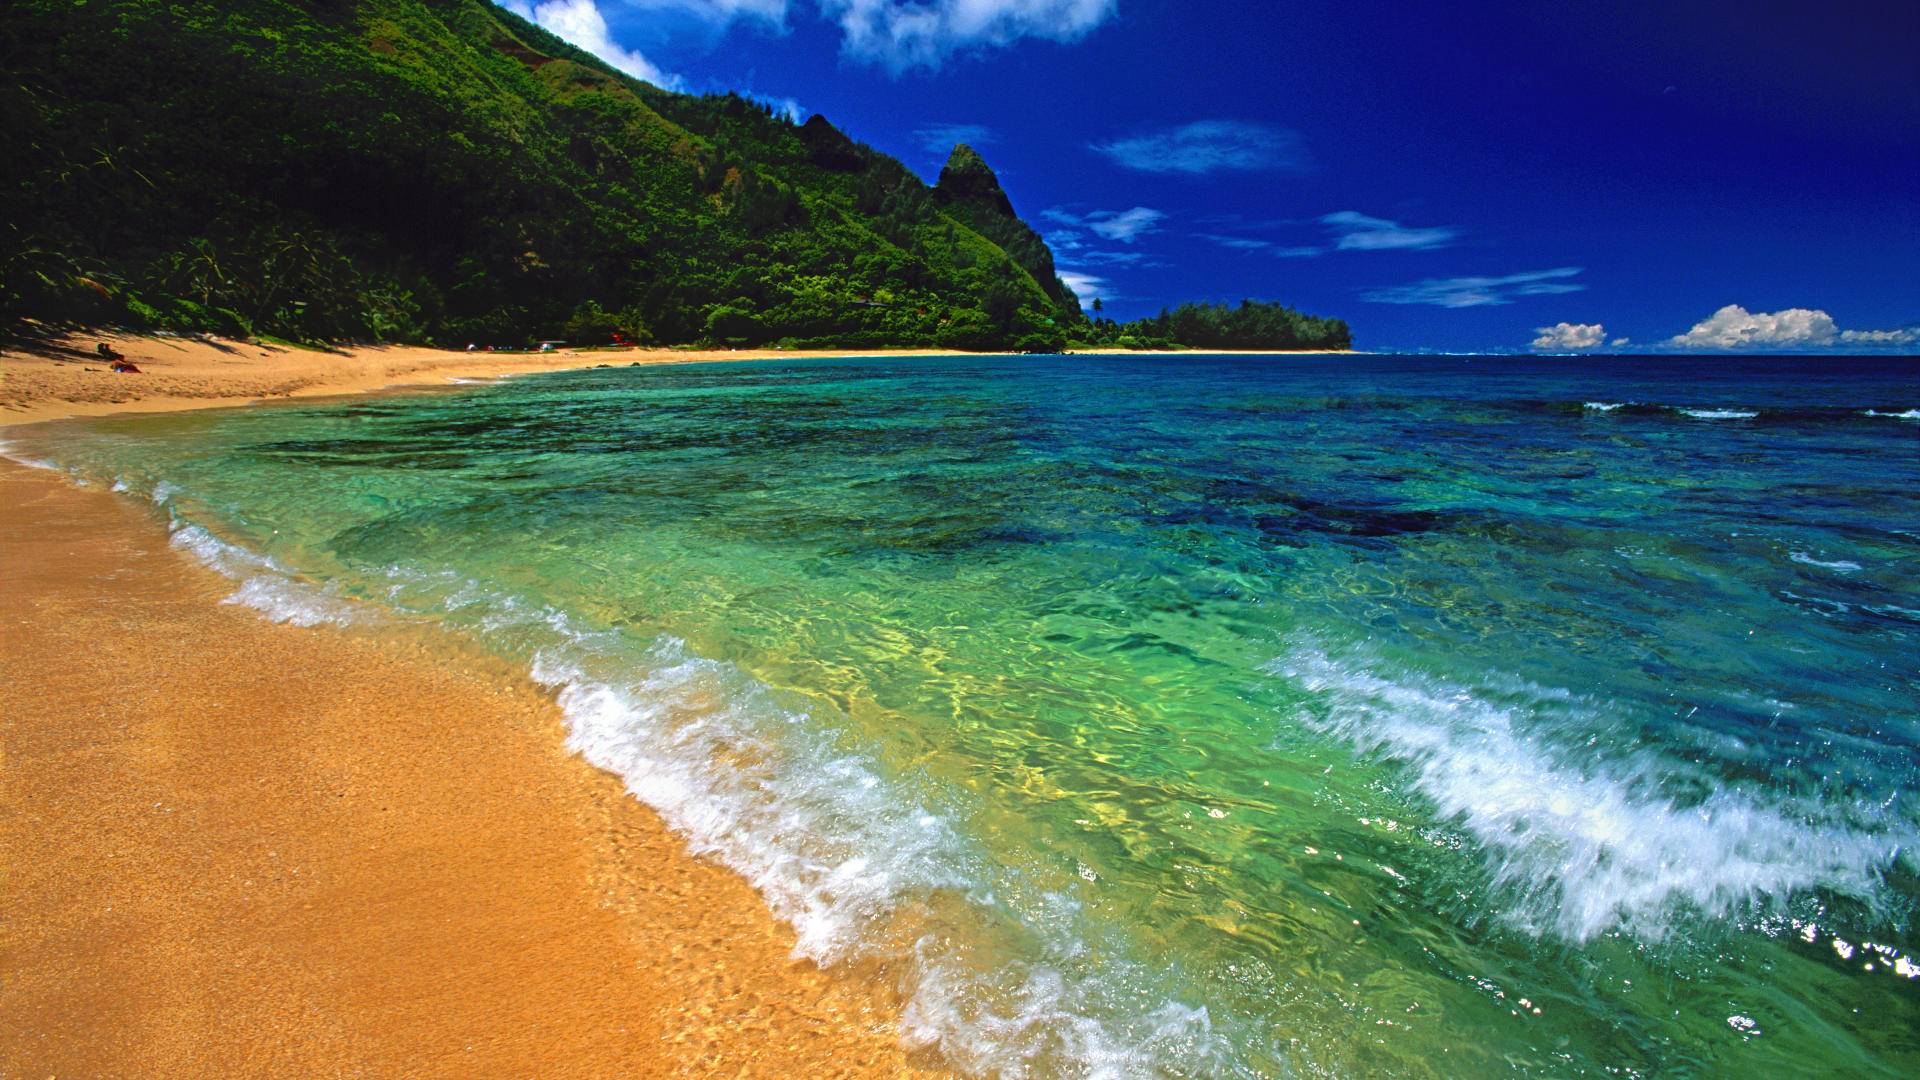 Hawaii desktop wallpaper